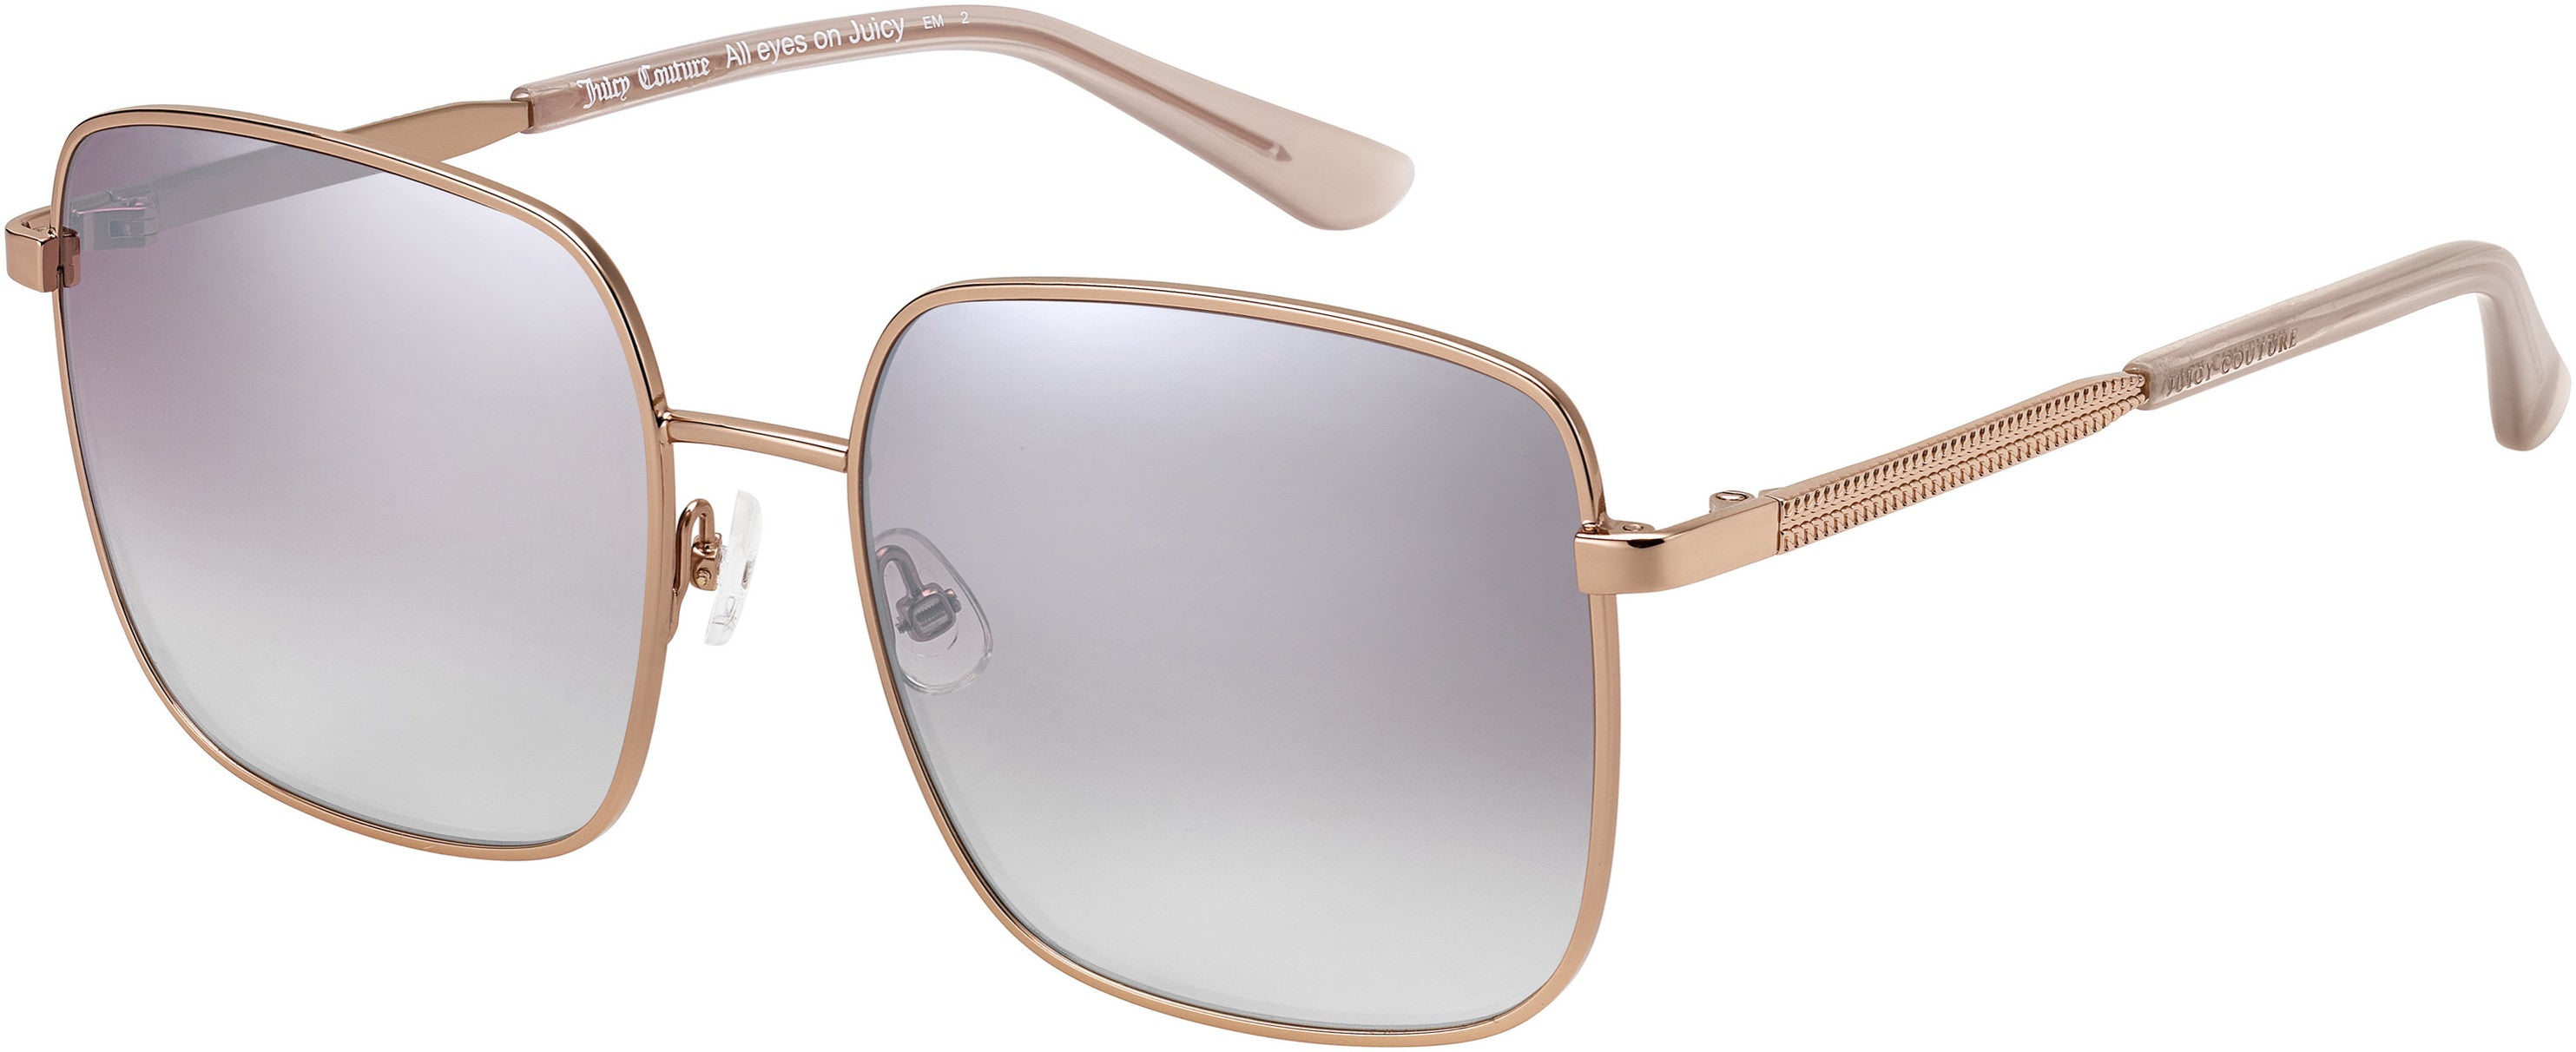 Juicy Couture Juicy 605/S Rectangular Sunglasses 0AU2-0AU2  Red Gold (NQ Brown Mirror Gradient)